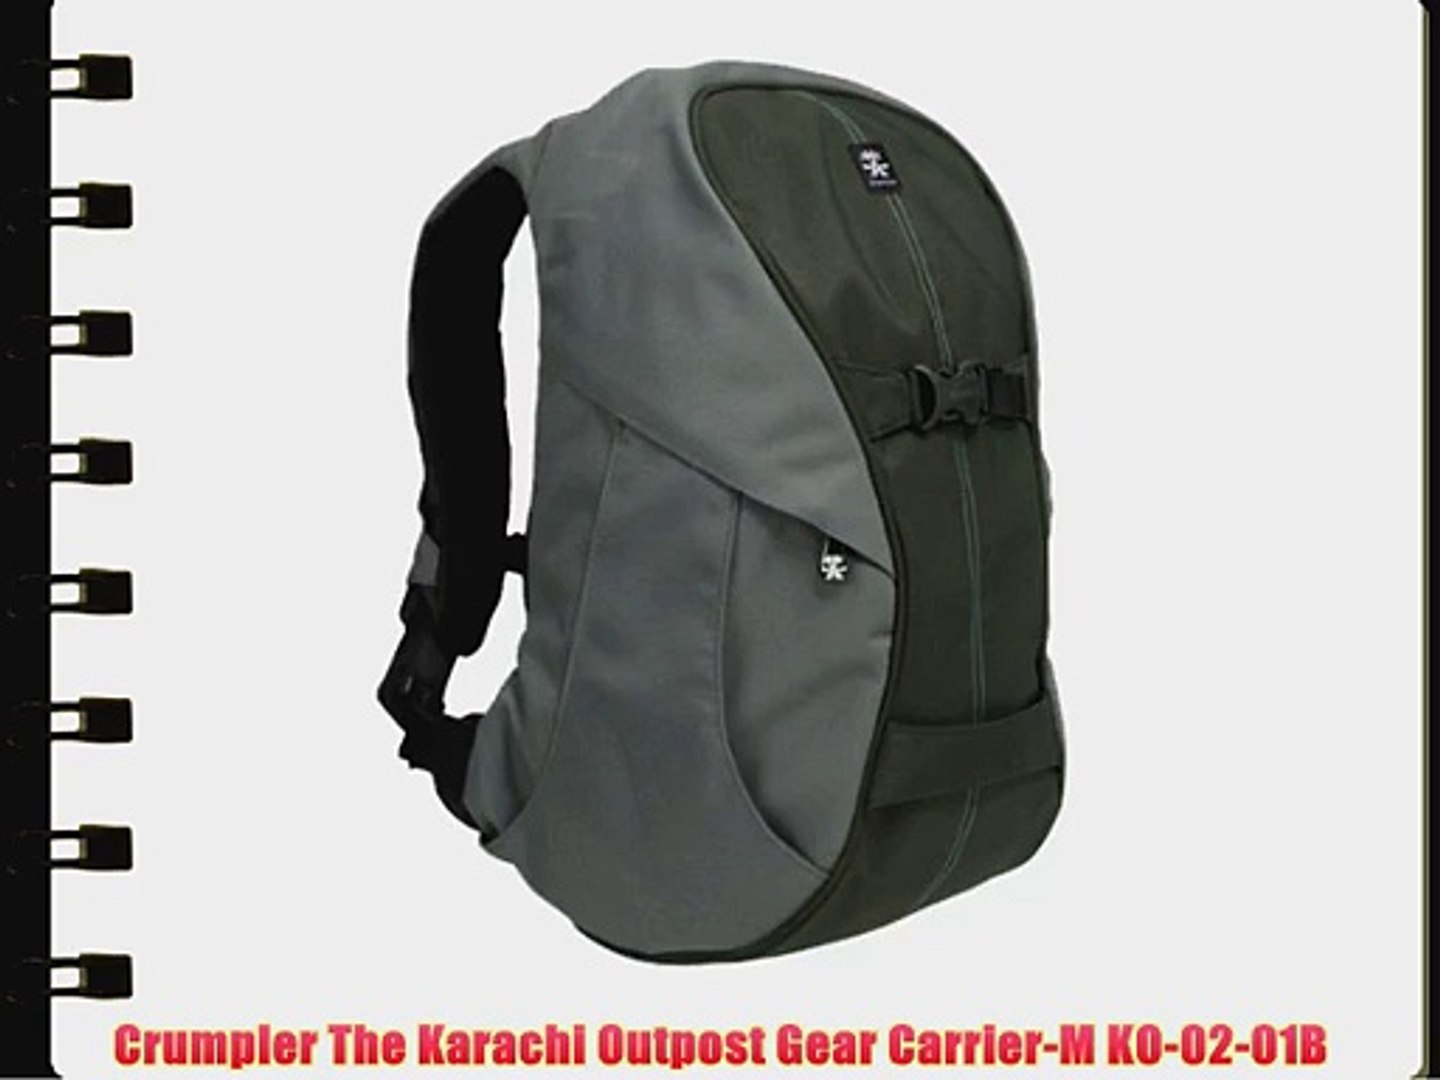 Crumpler The Karachi Outpost Gear Carrier-M KO-02-01B - video Dailymotion